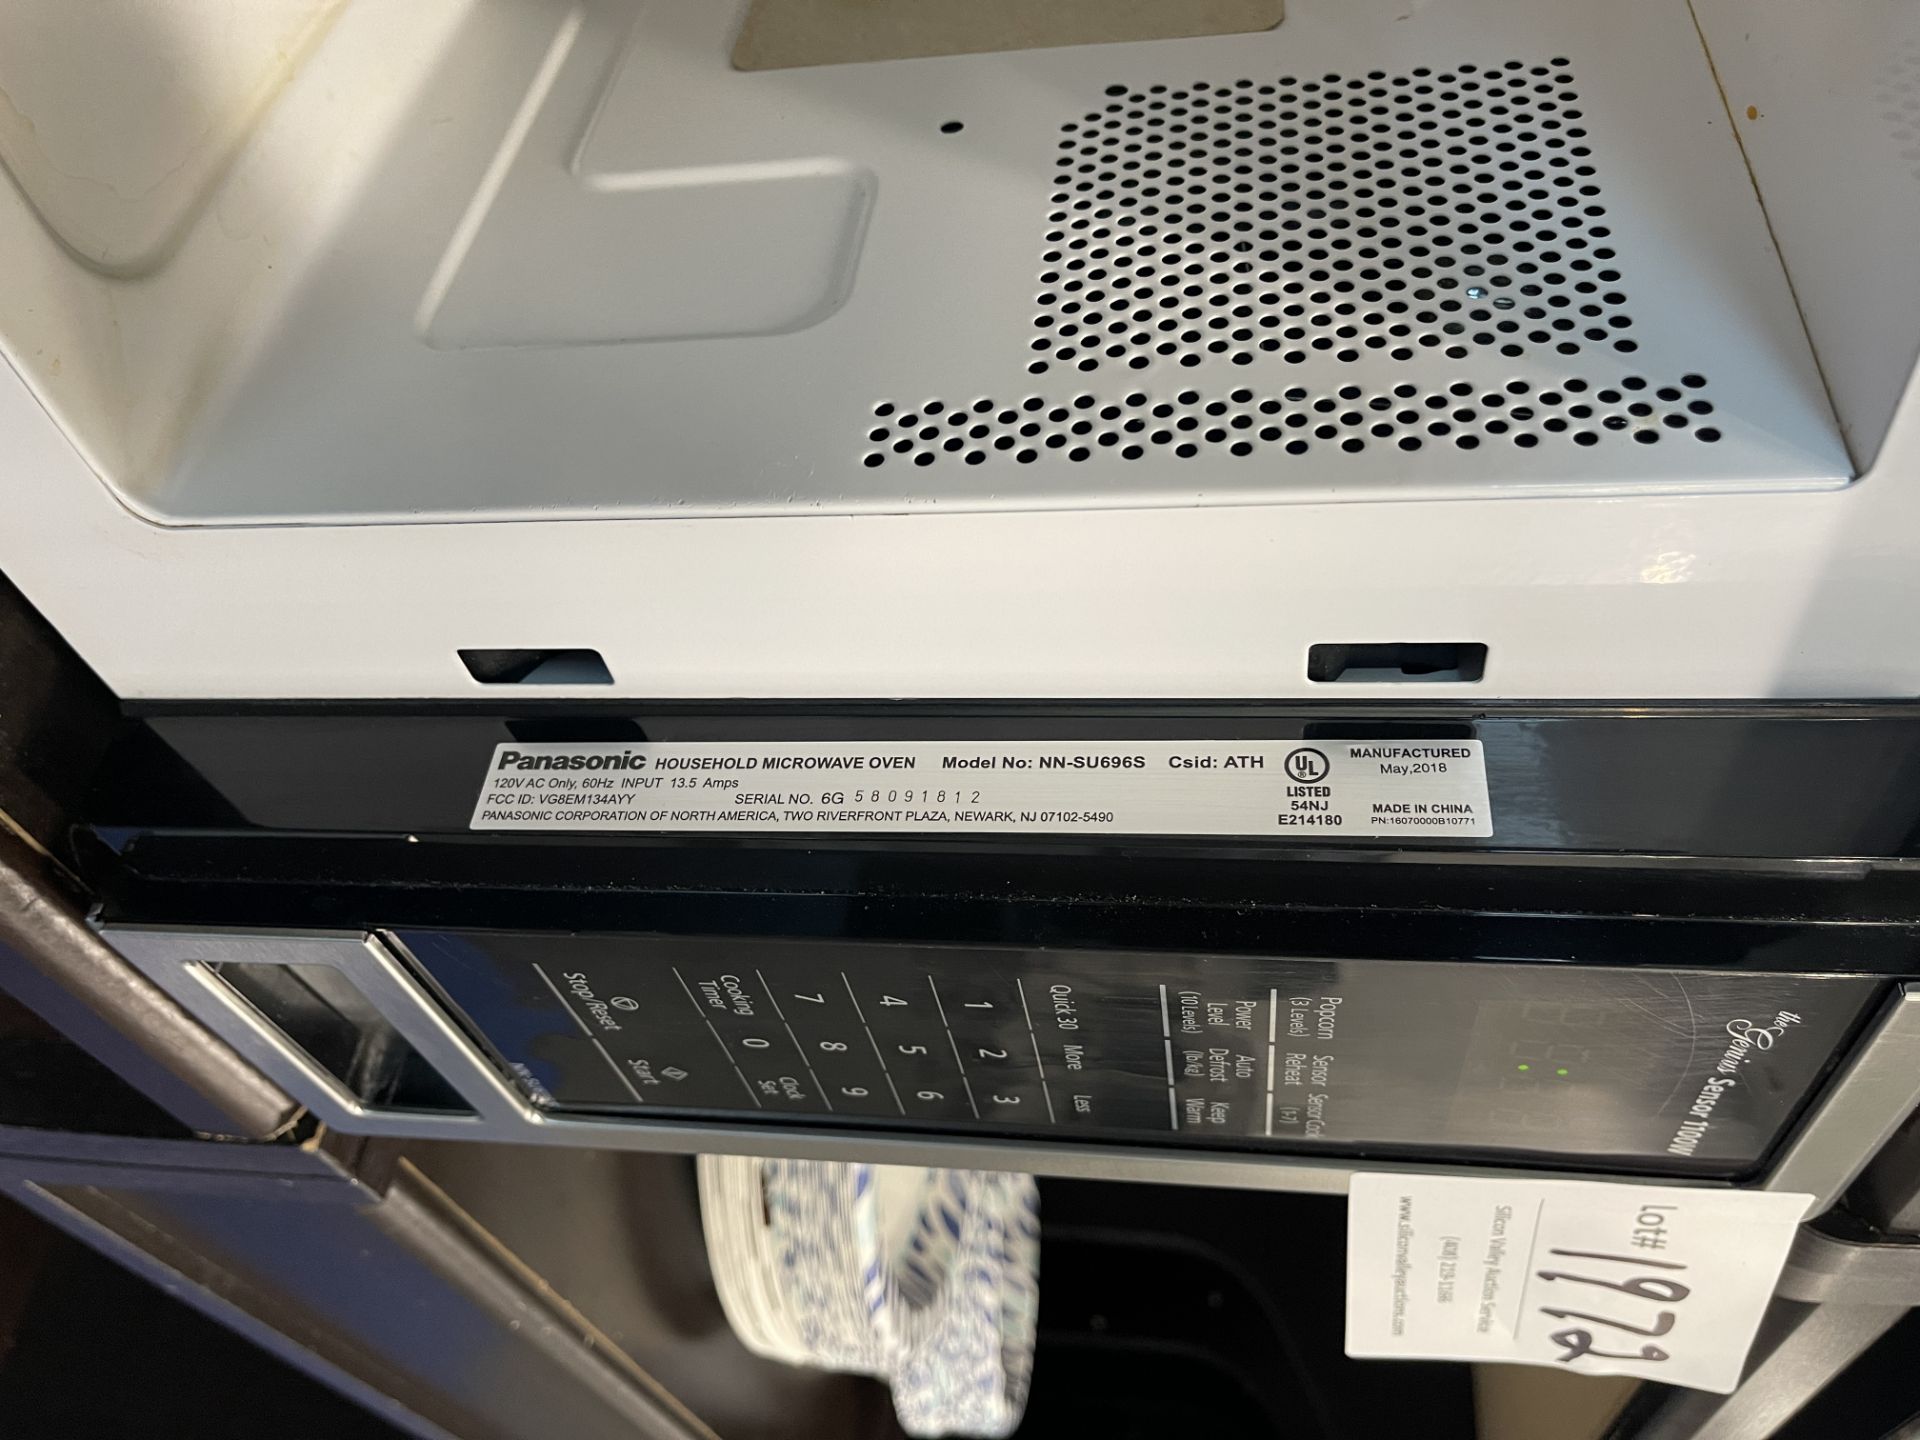 Panasonic Microwave Oven Model NN-SU696S - Bild 2 aus 2